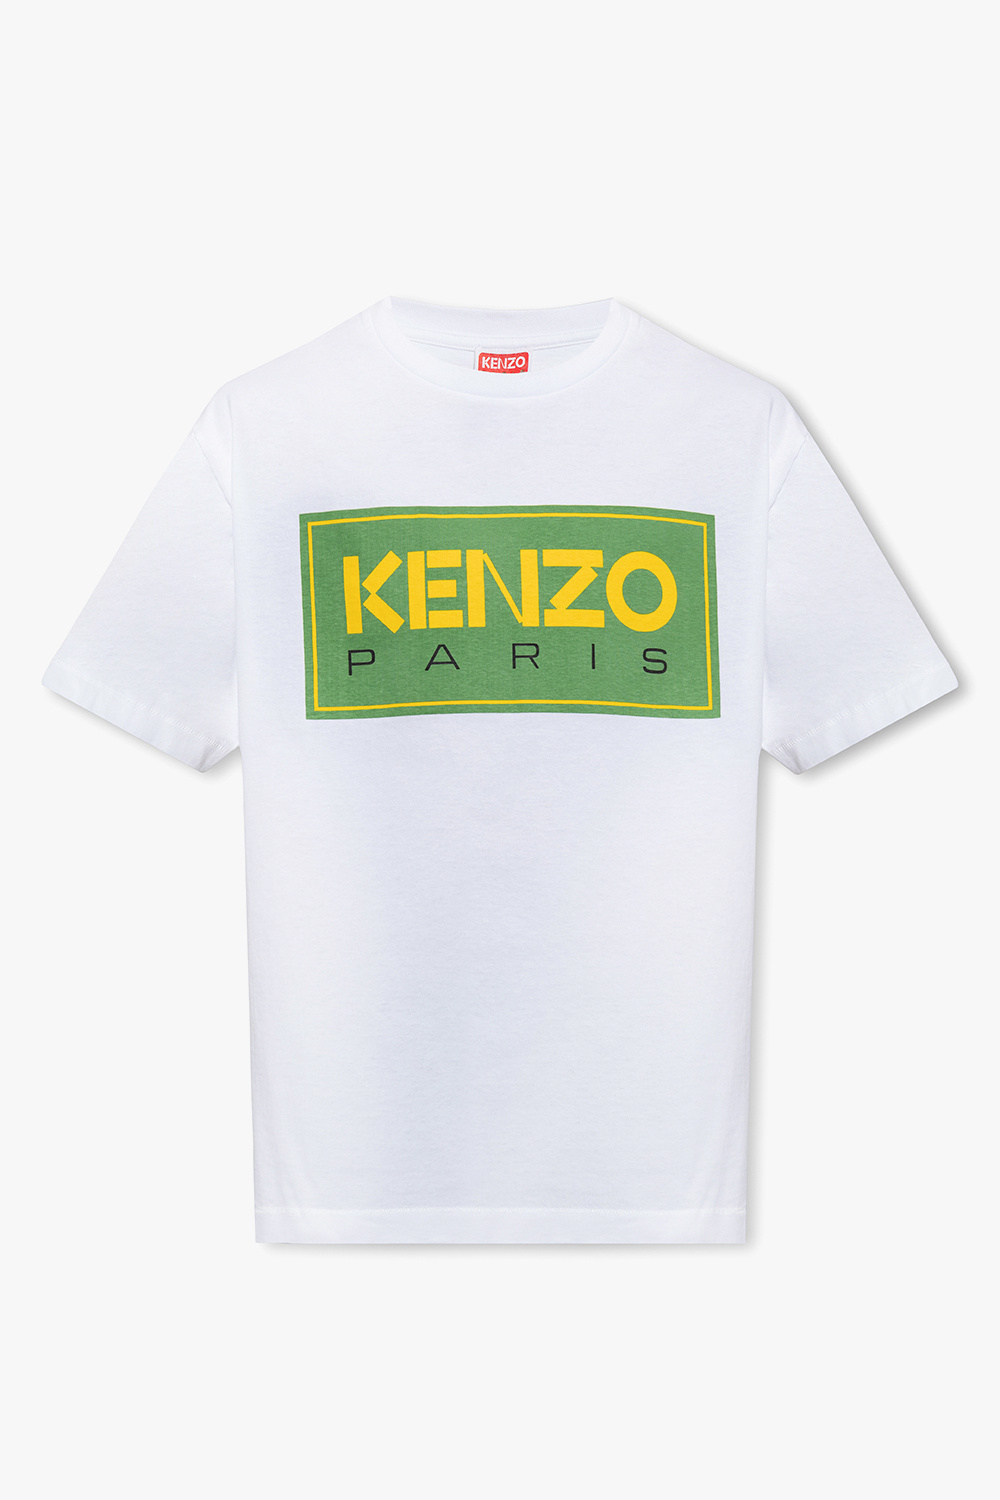 shirt Worldwide Globe Kenzo - T-shirt blanc à pois noirs